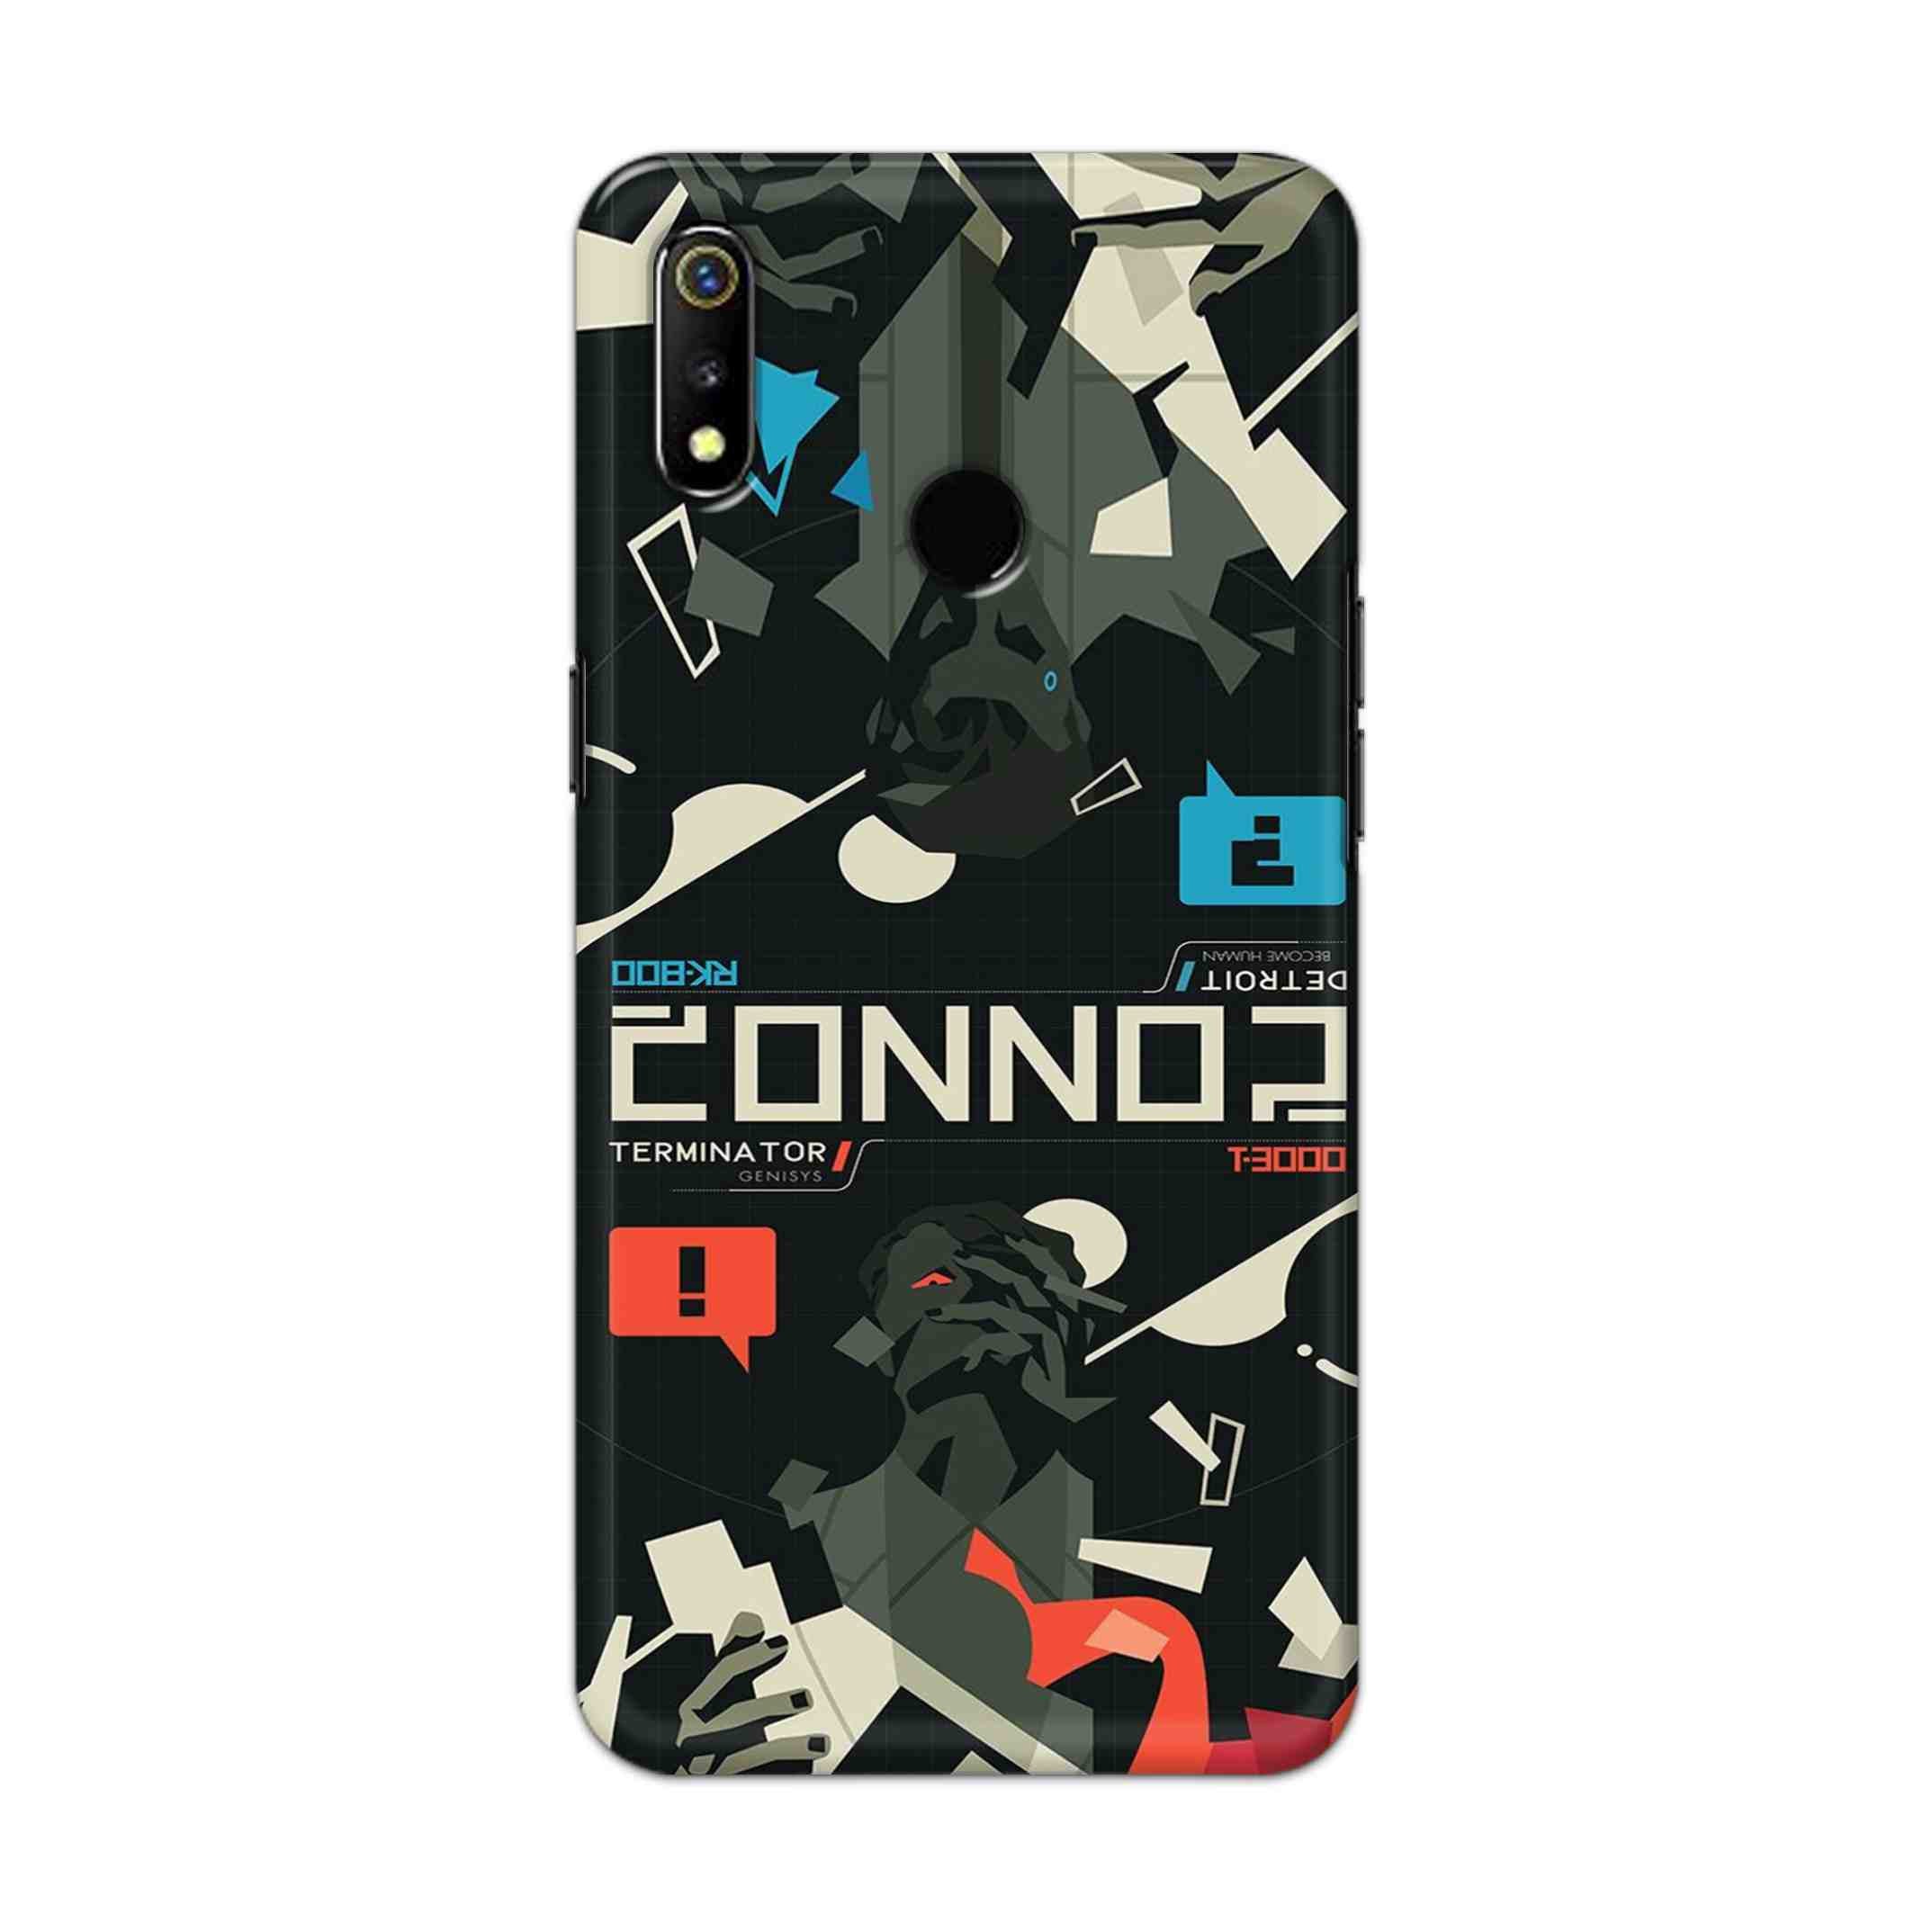 Buy Terminator Hard Back Mobile Phone Case Cover For Oppo Realme 3 Online